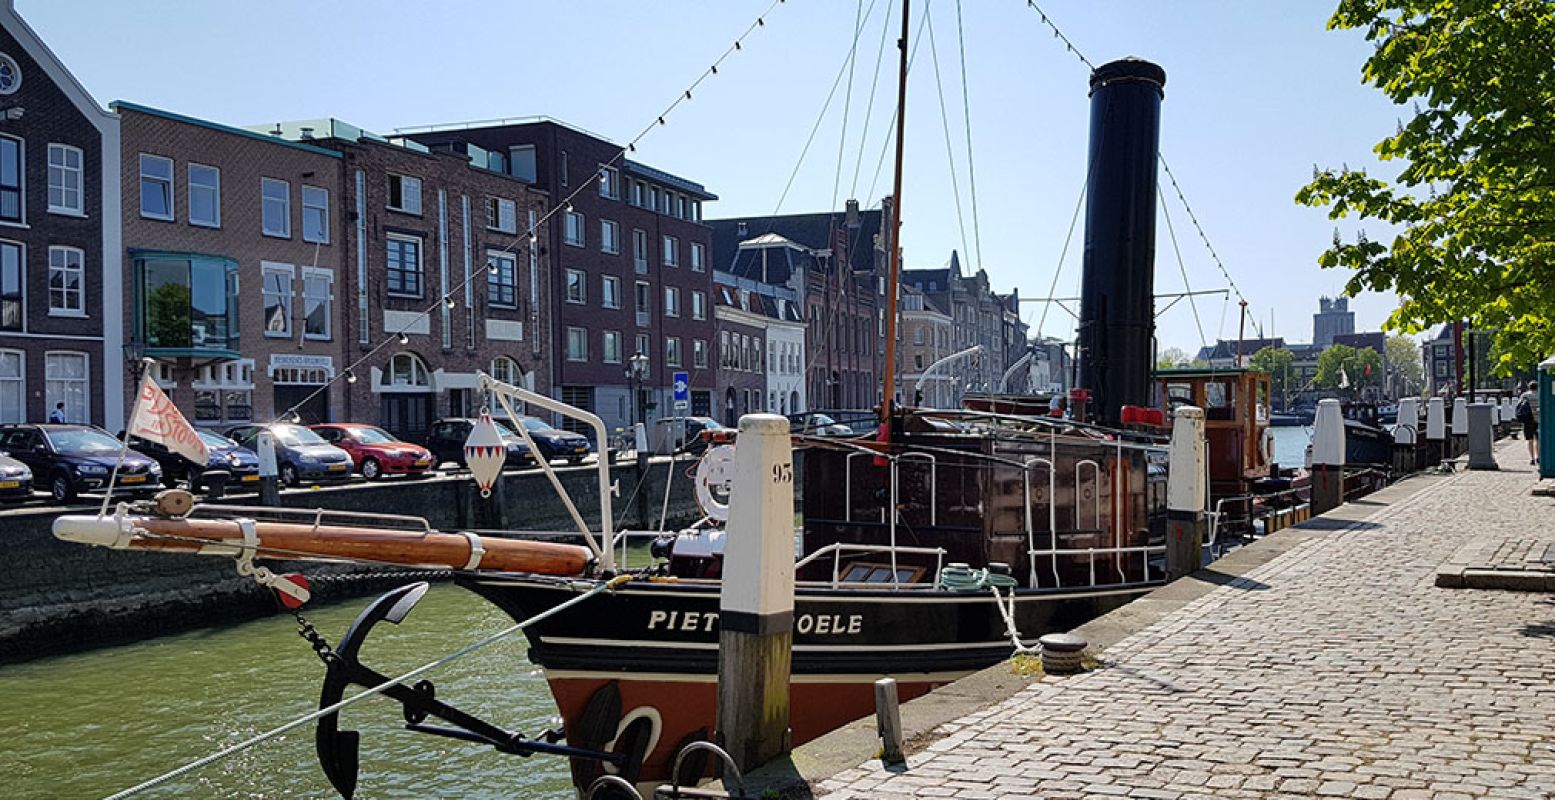 Schepen spotten in Dordrecht. Foto: DagjeWeg.NL